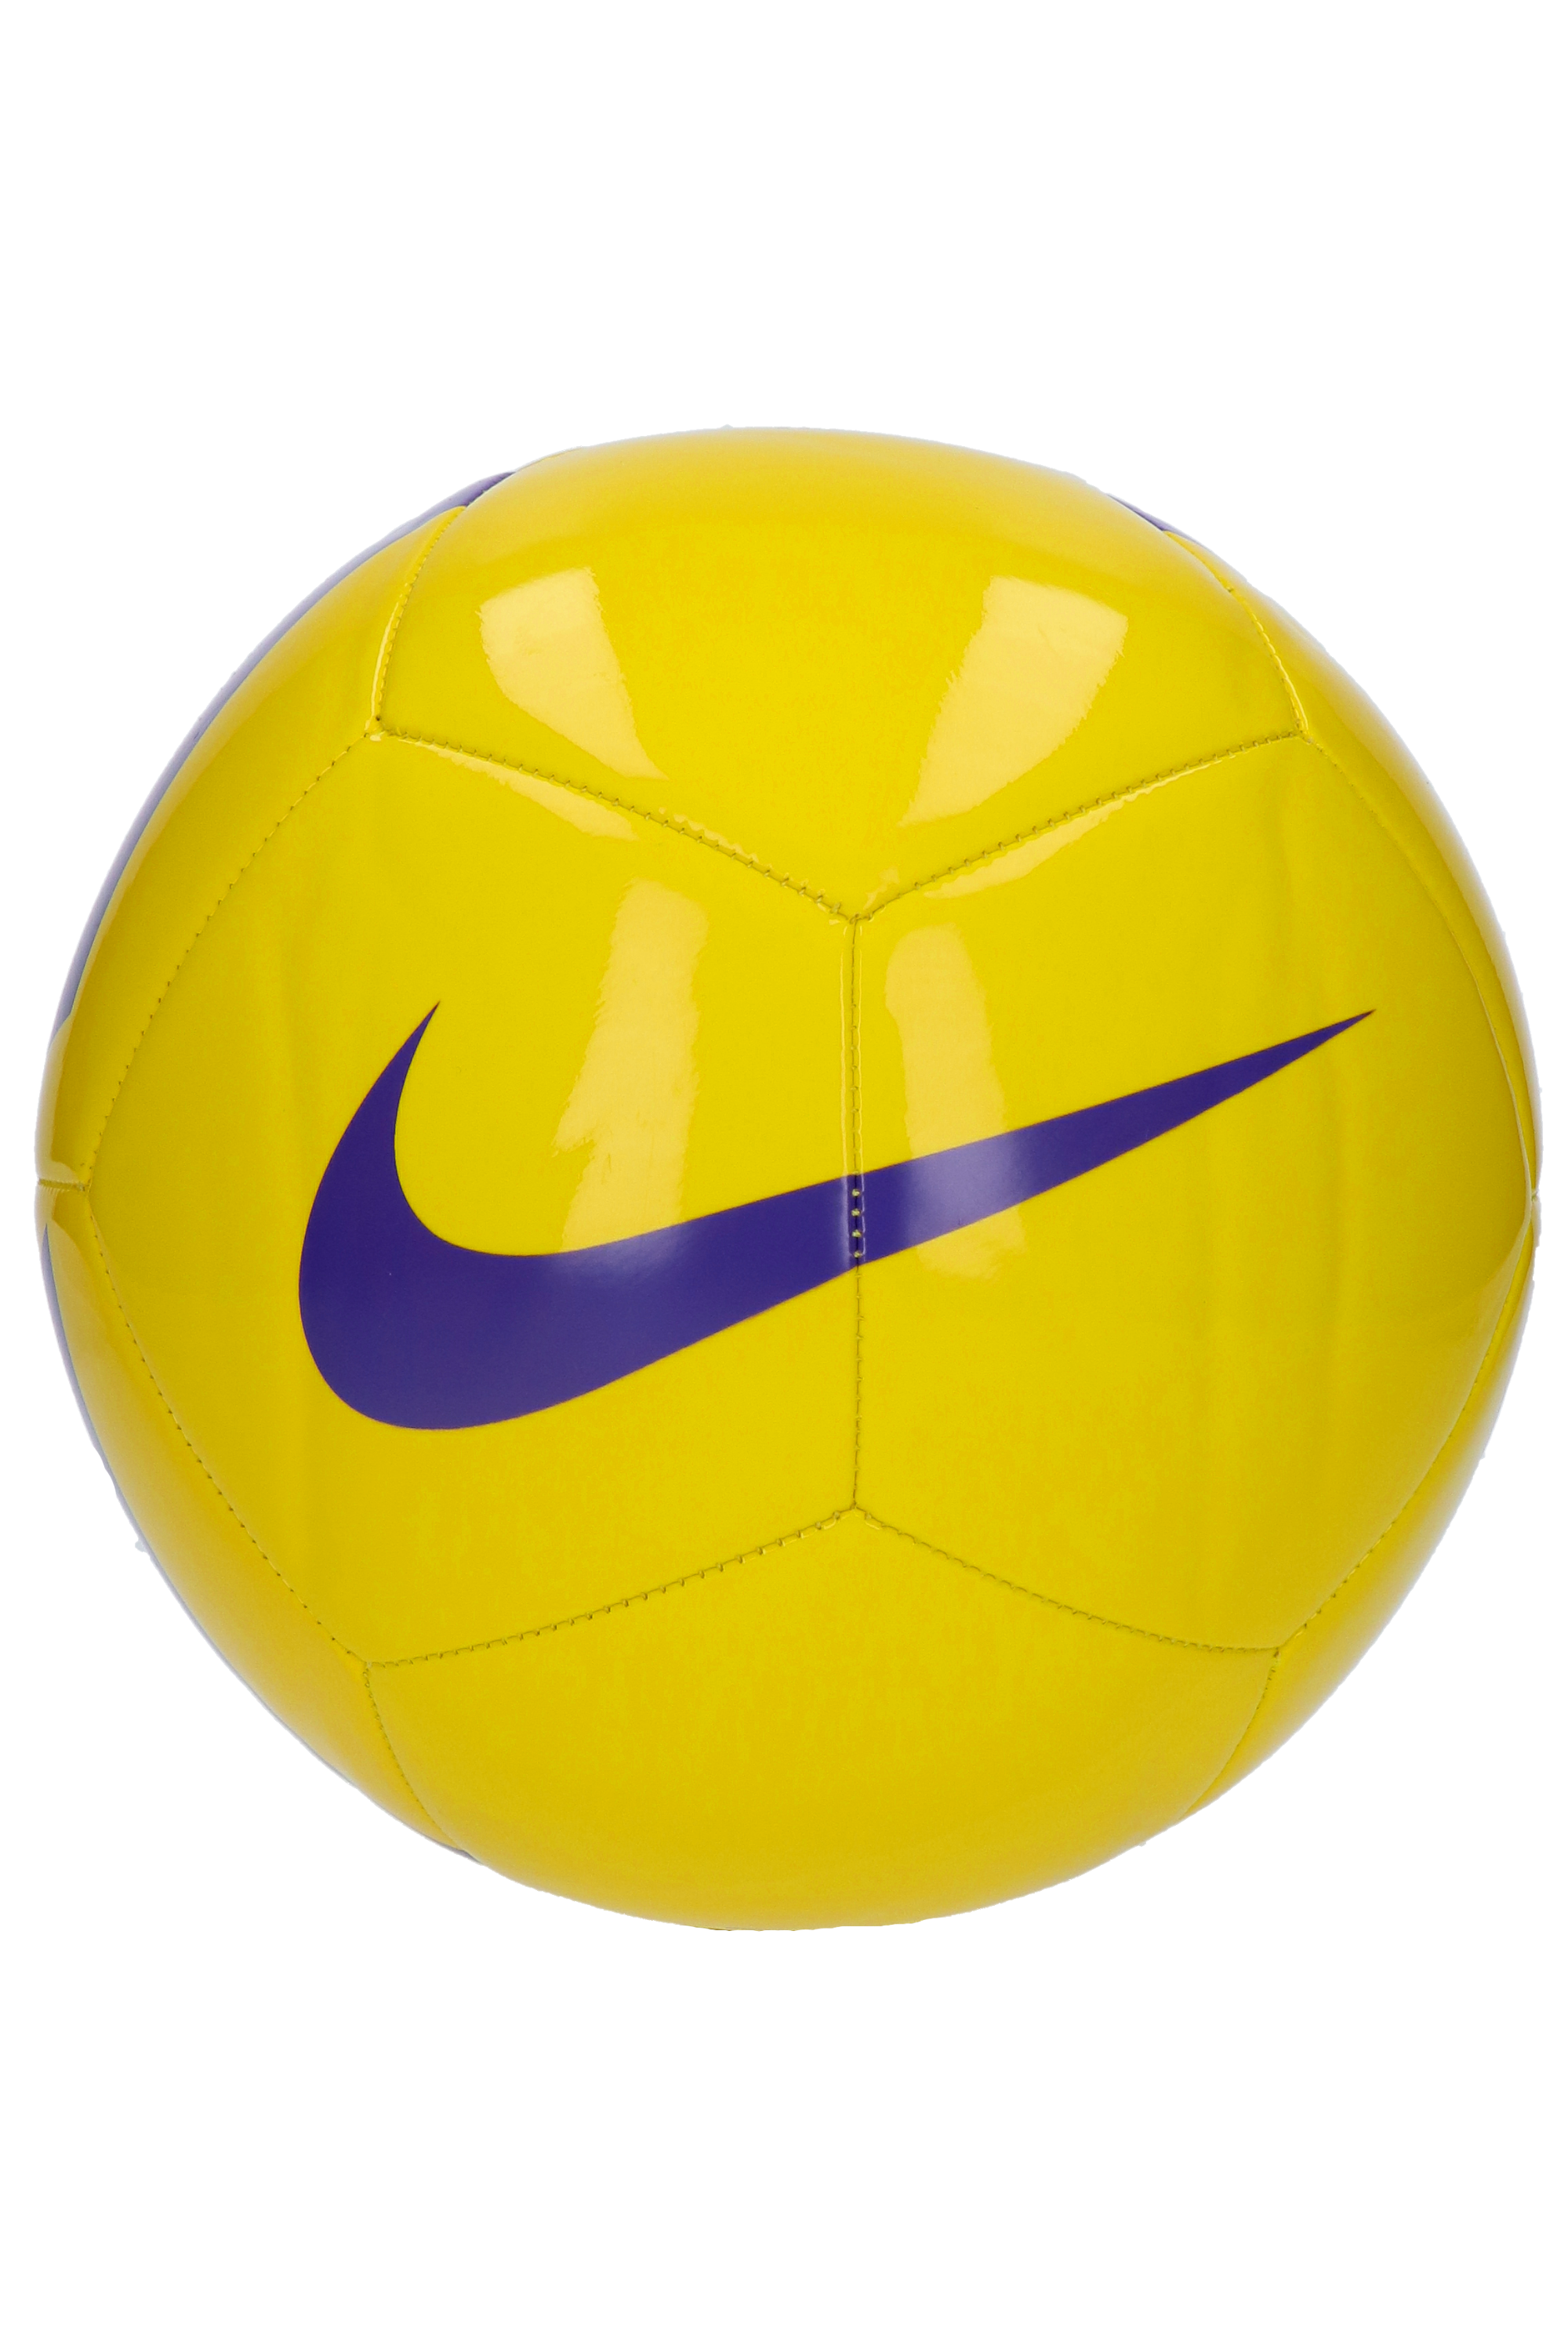 Ball Nike Pitch Team SC3166-701 size 3 